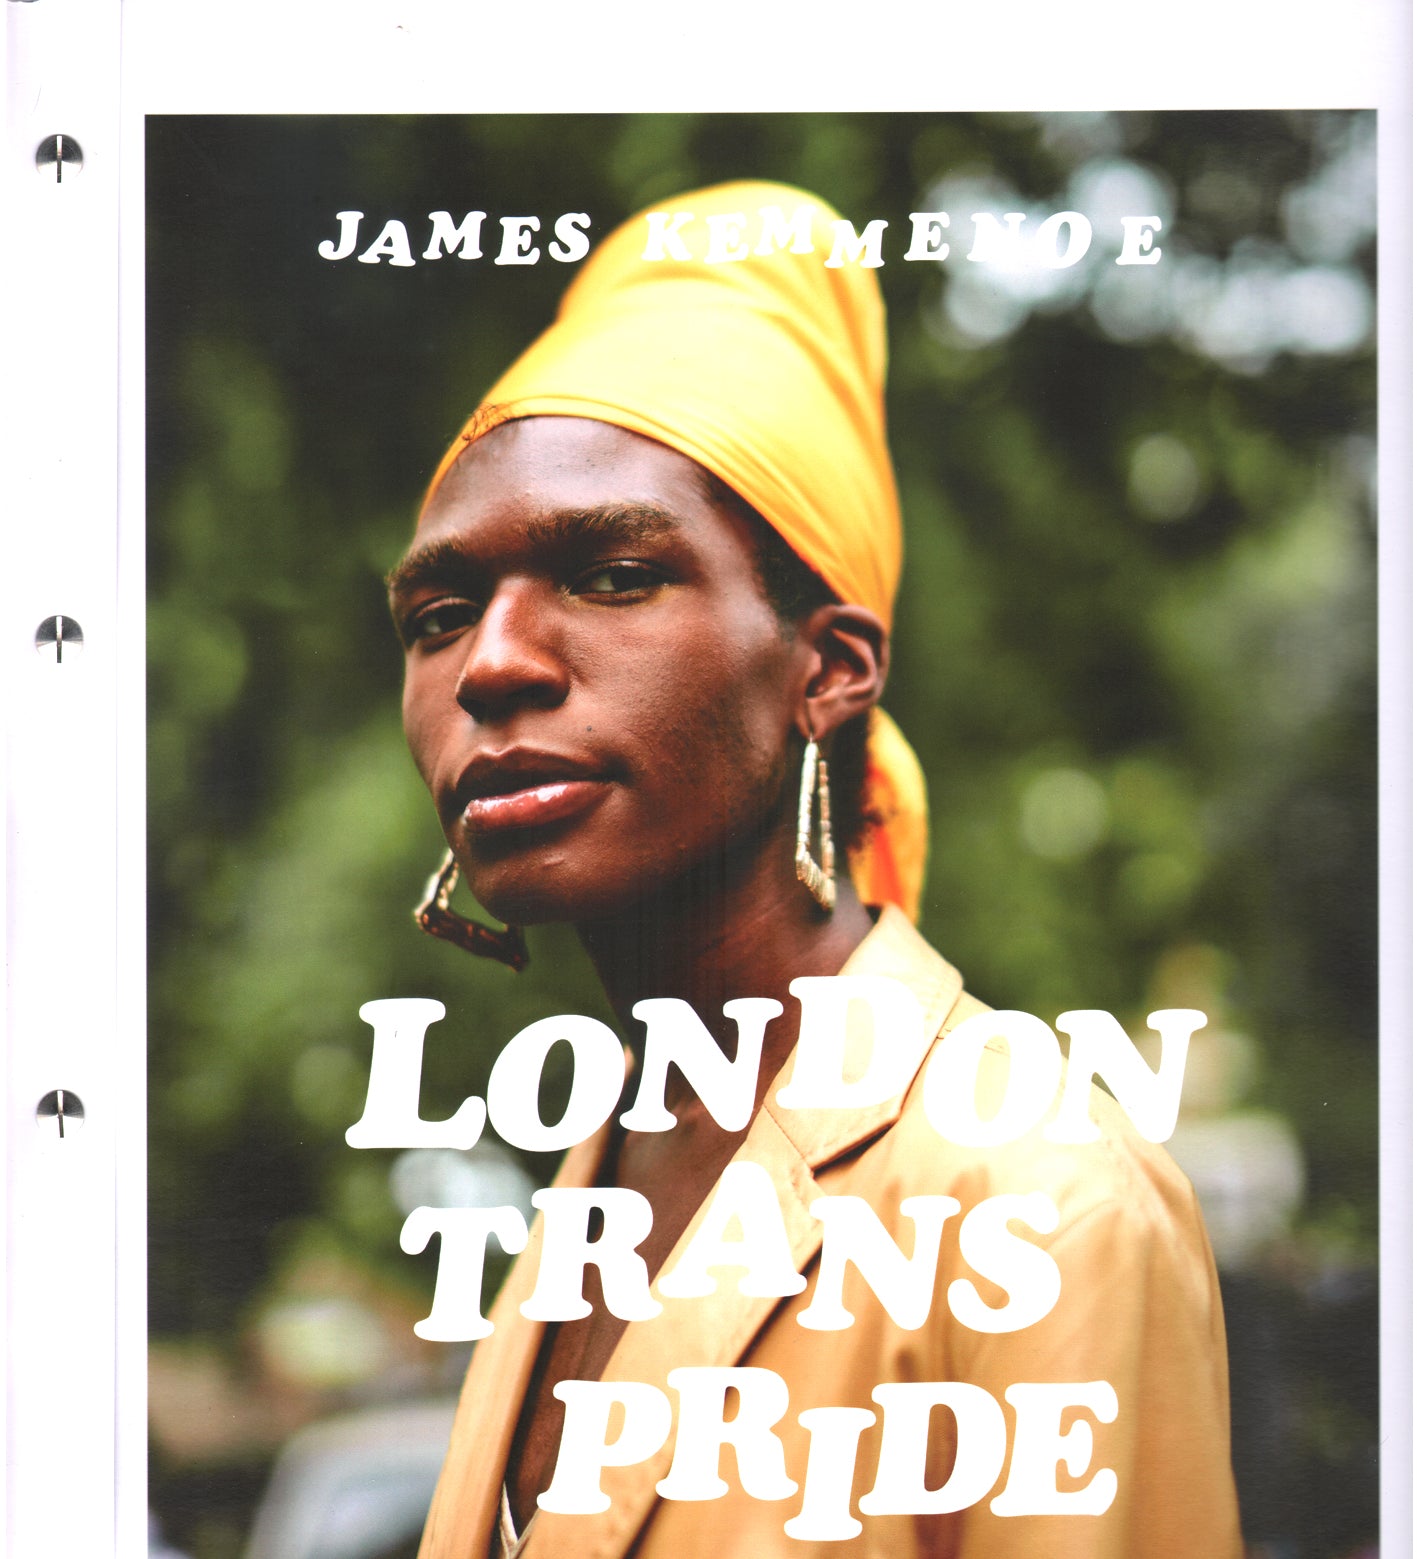 James Kemmenoe: London Trans Pride